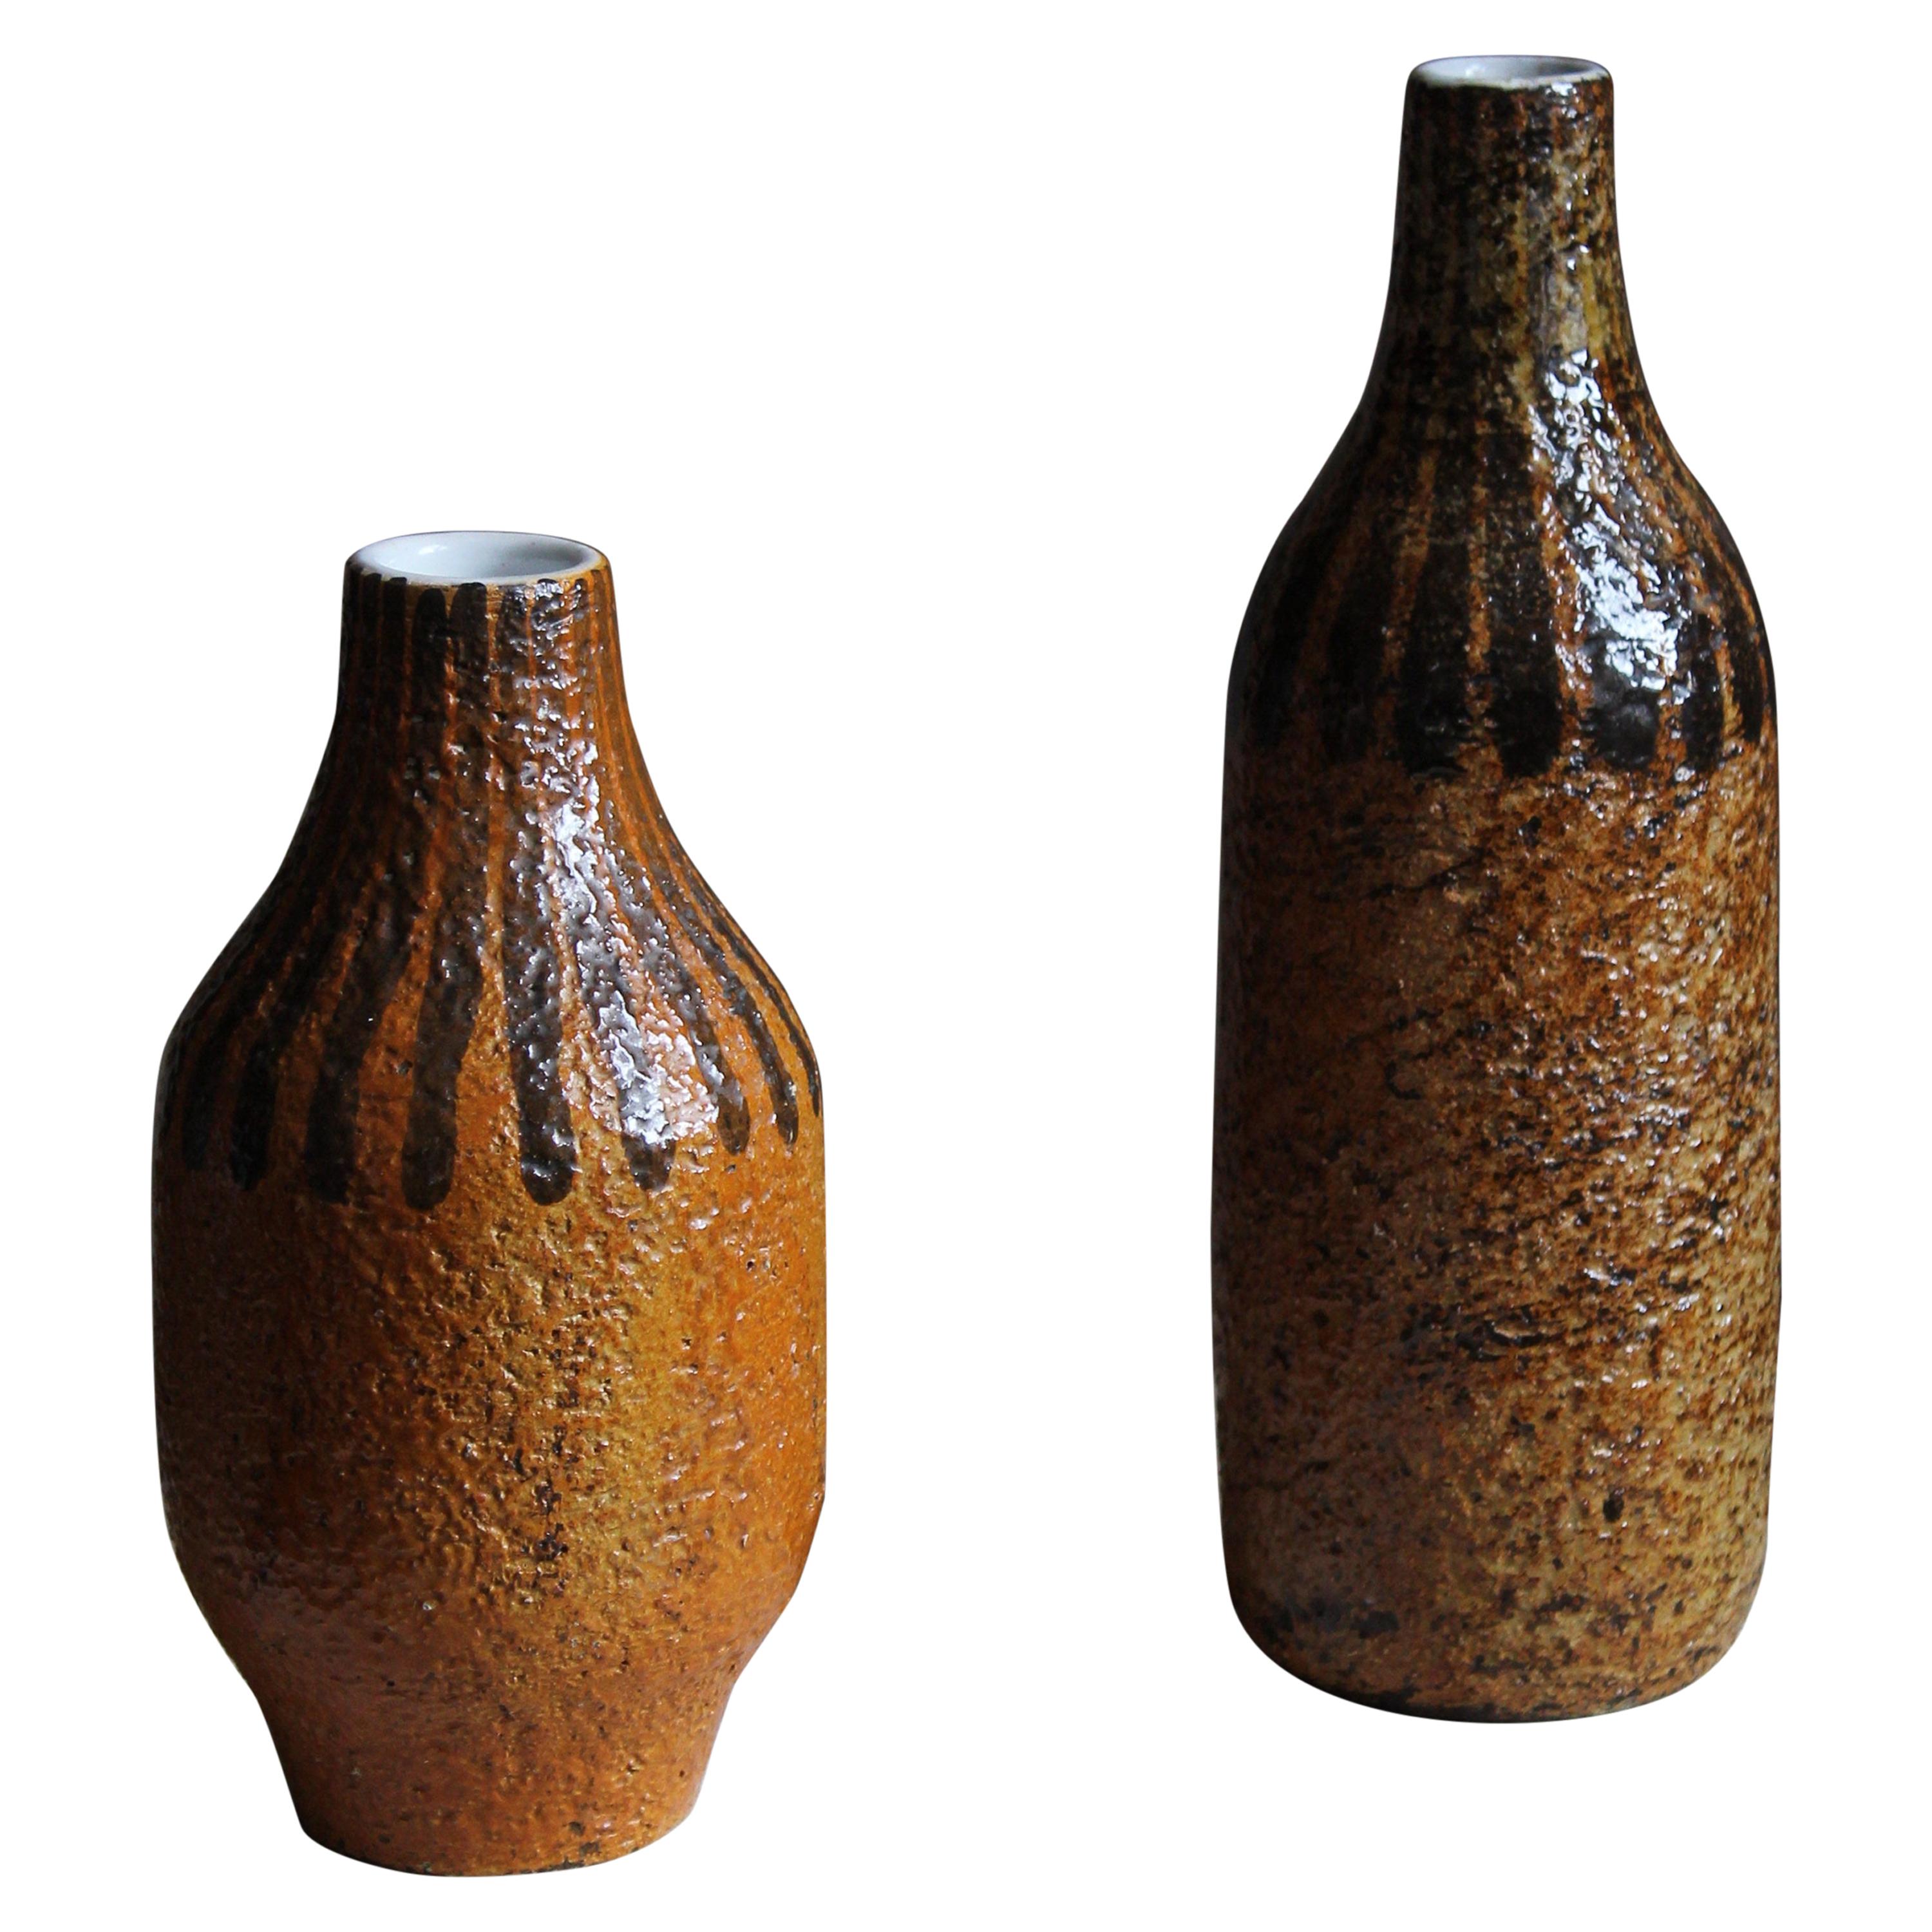 Mari Simmulson, Vases, Glazed and Hand-Painted Stoneware, Sweden, C. 1950s